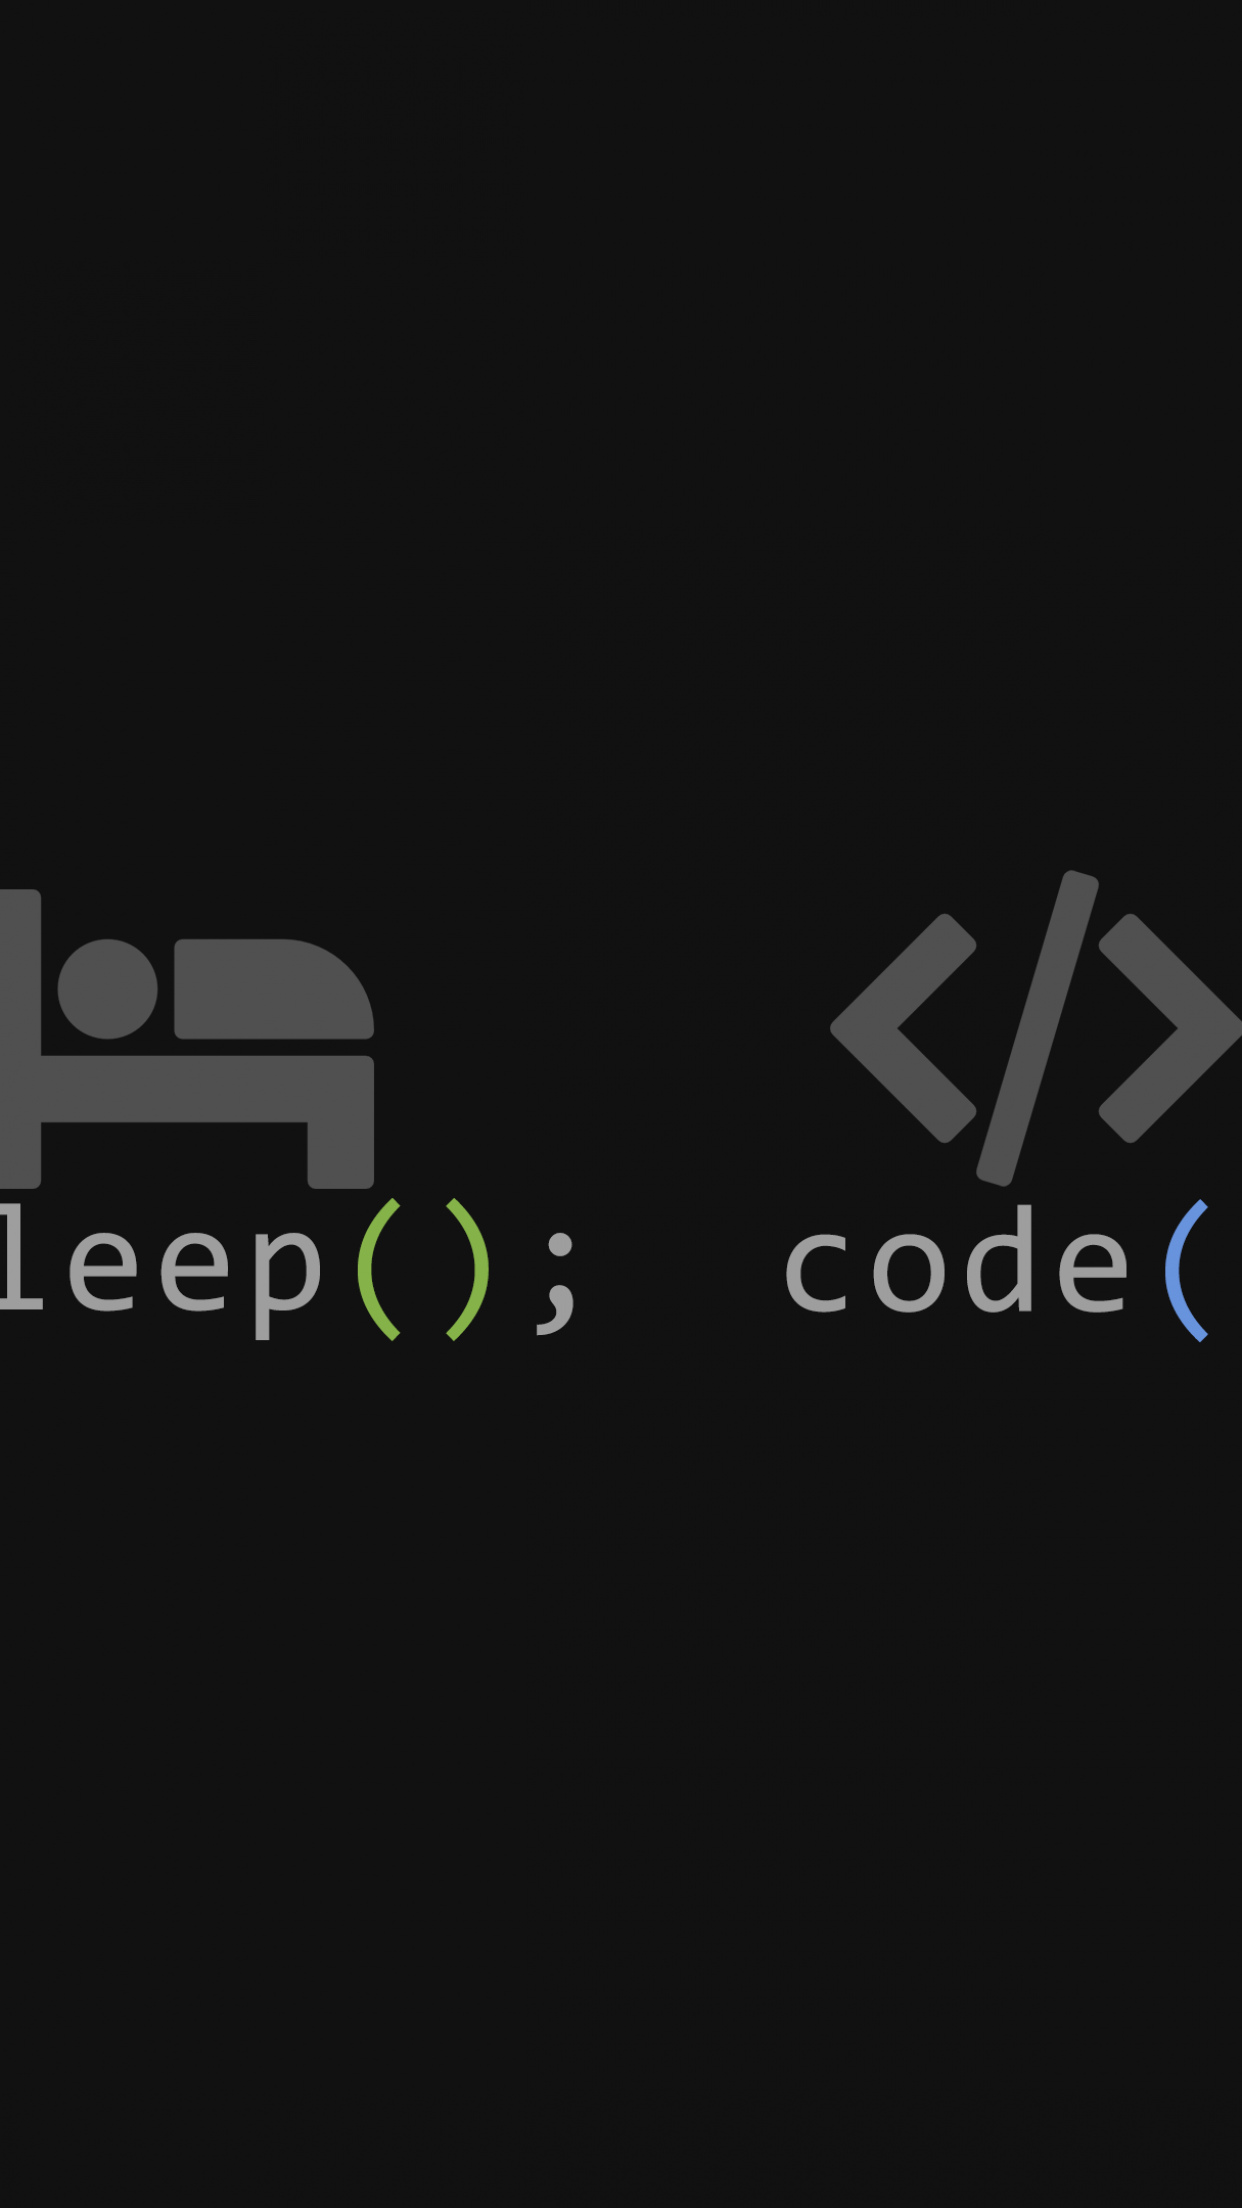 Eat Sleep Code Repeat Wallpaper in 4K